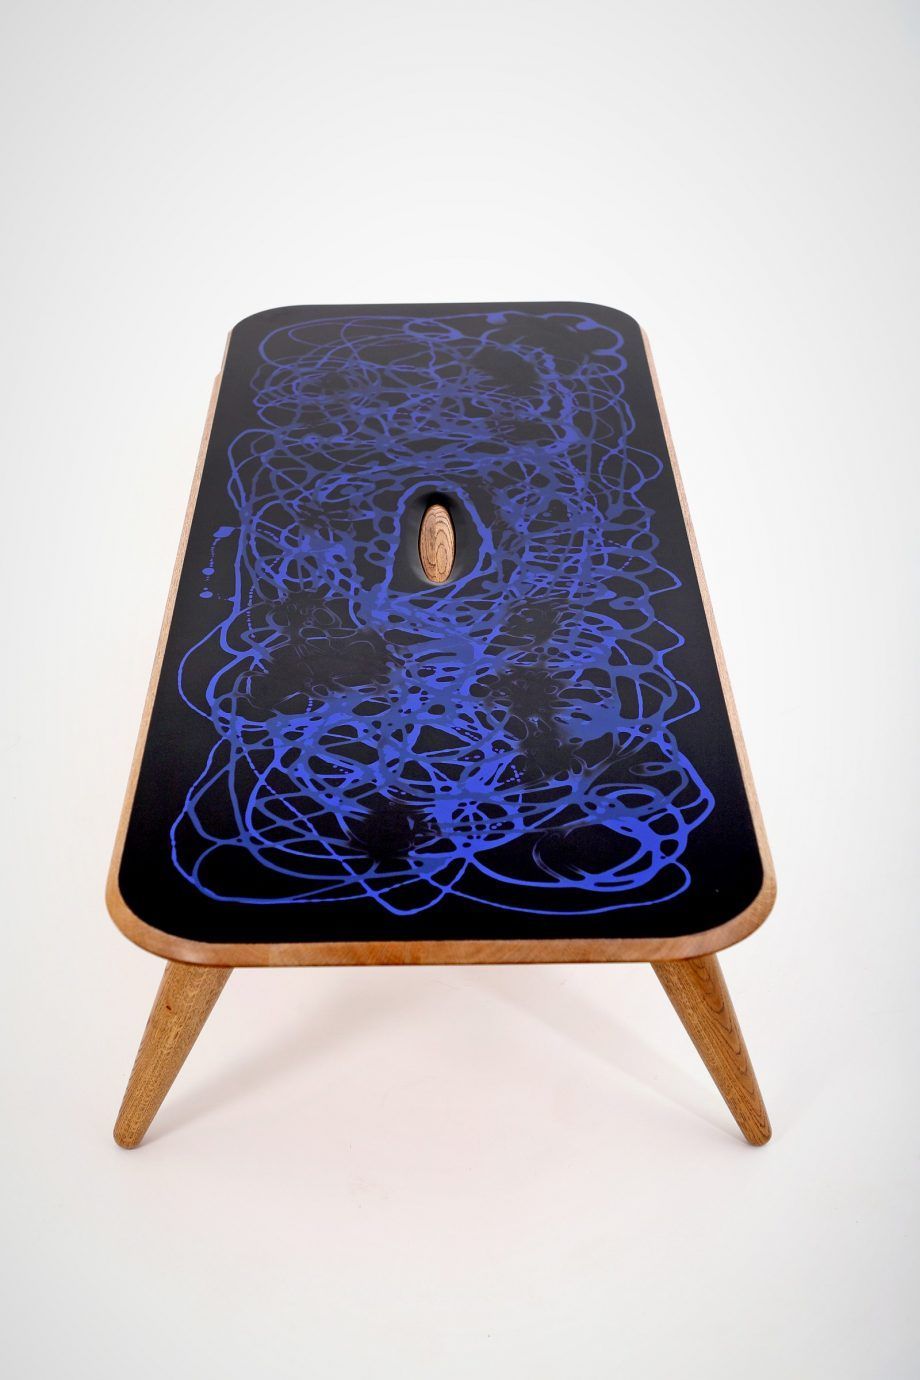 Atelier Hlavina: Šimon Majlát - Black Holes - coffee table